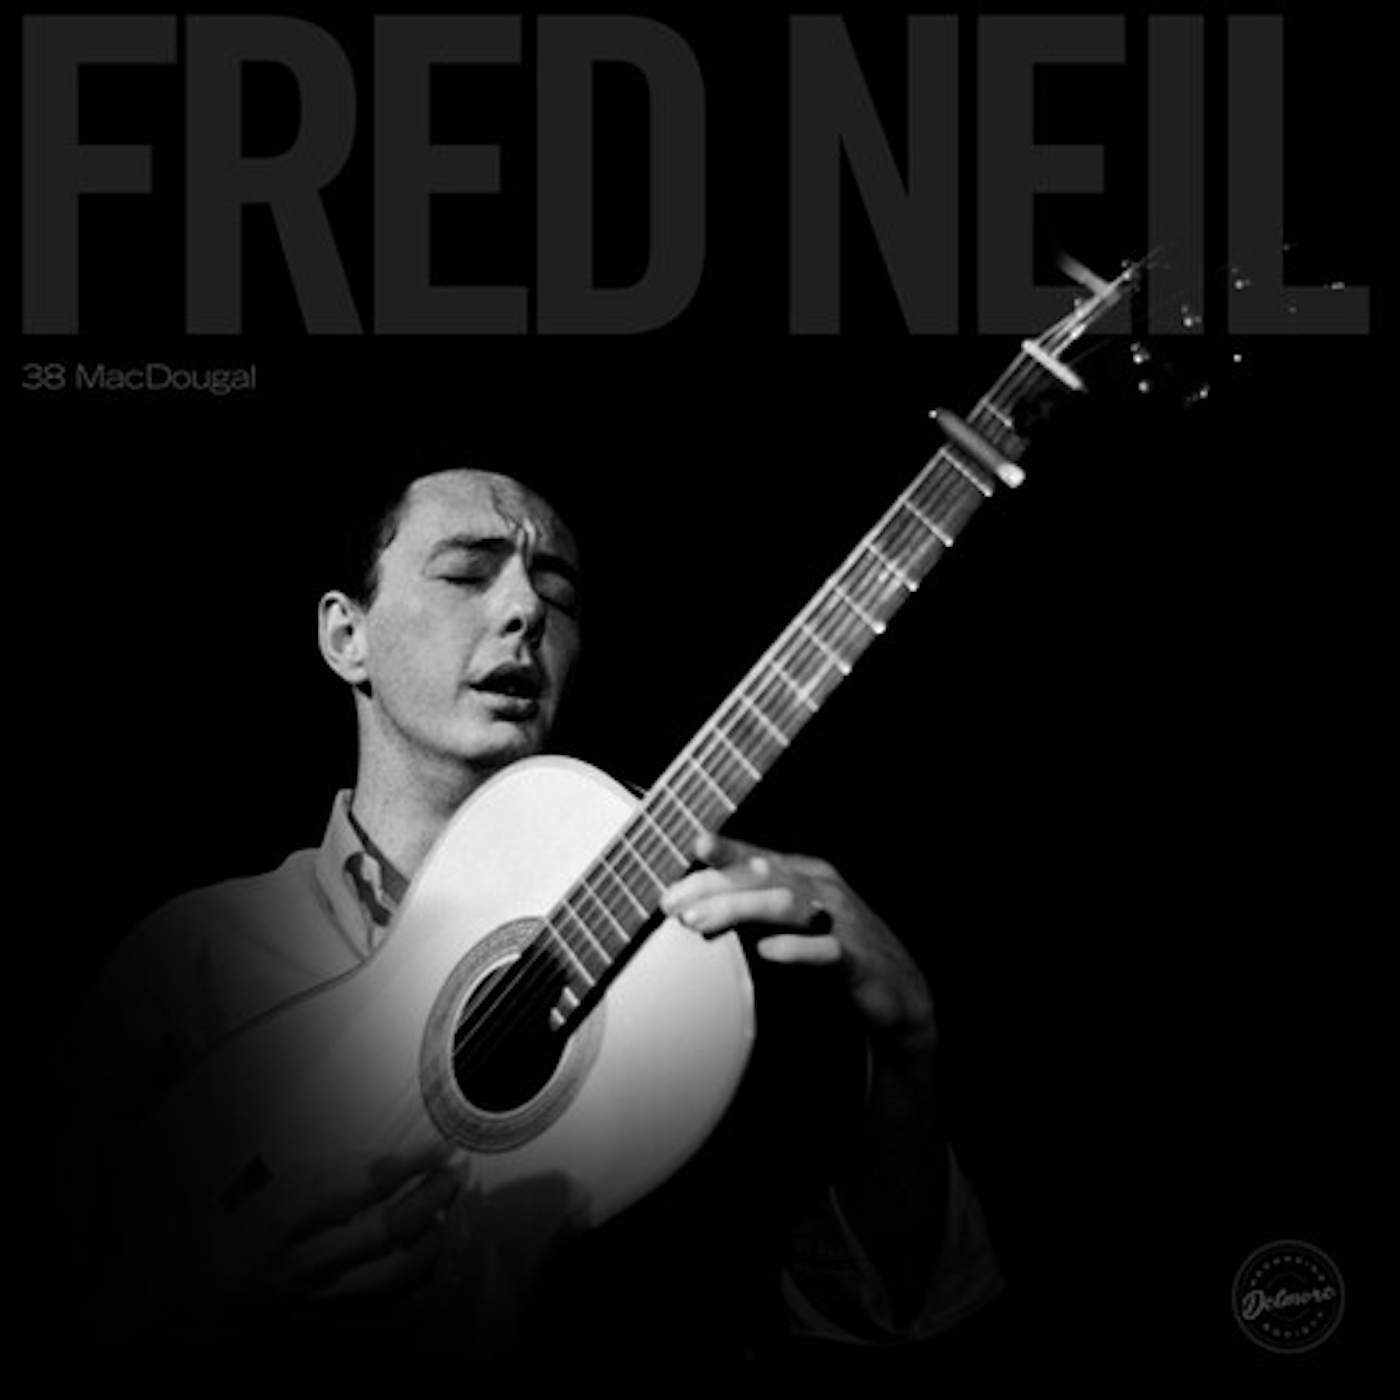 Fred Neil 38 MACDOUGAL CD